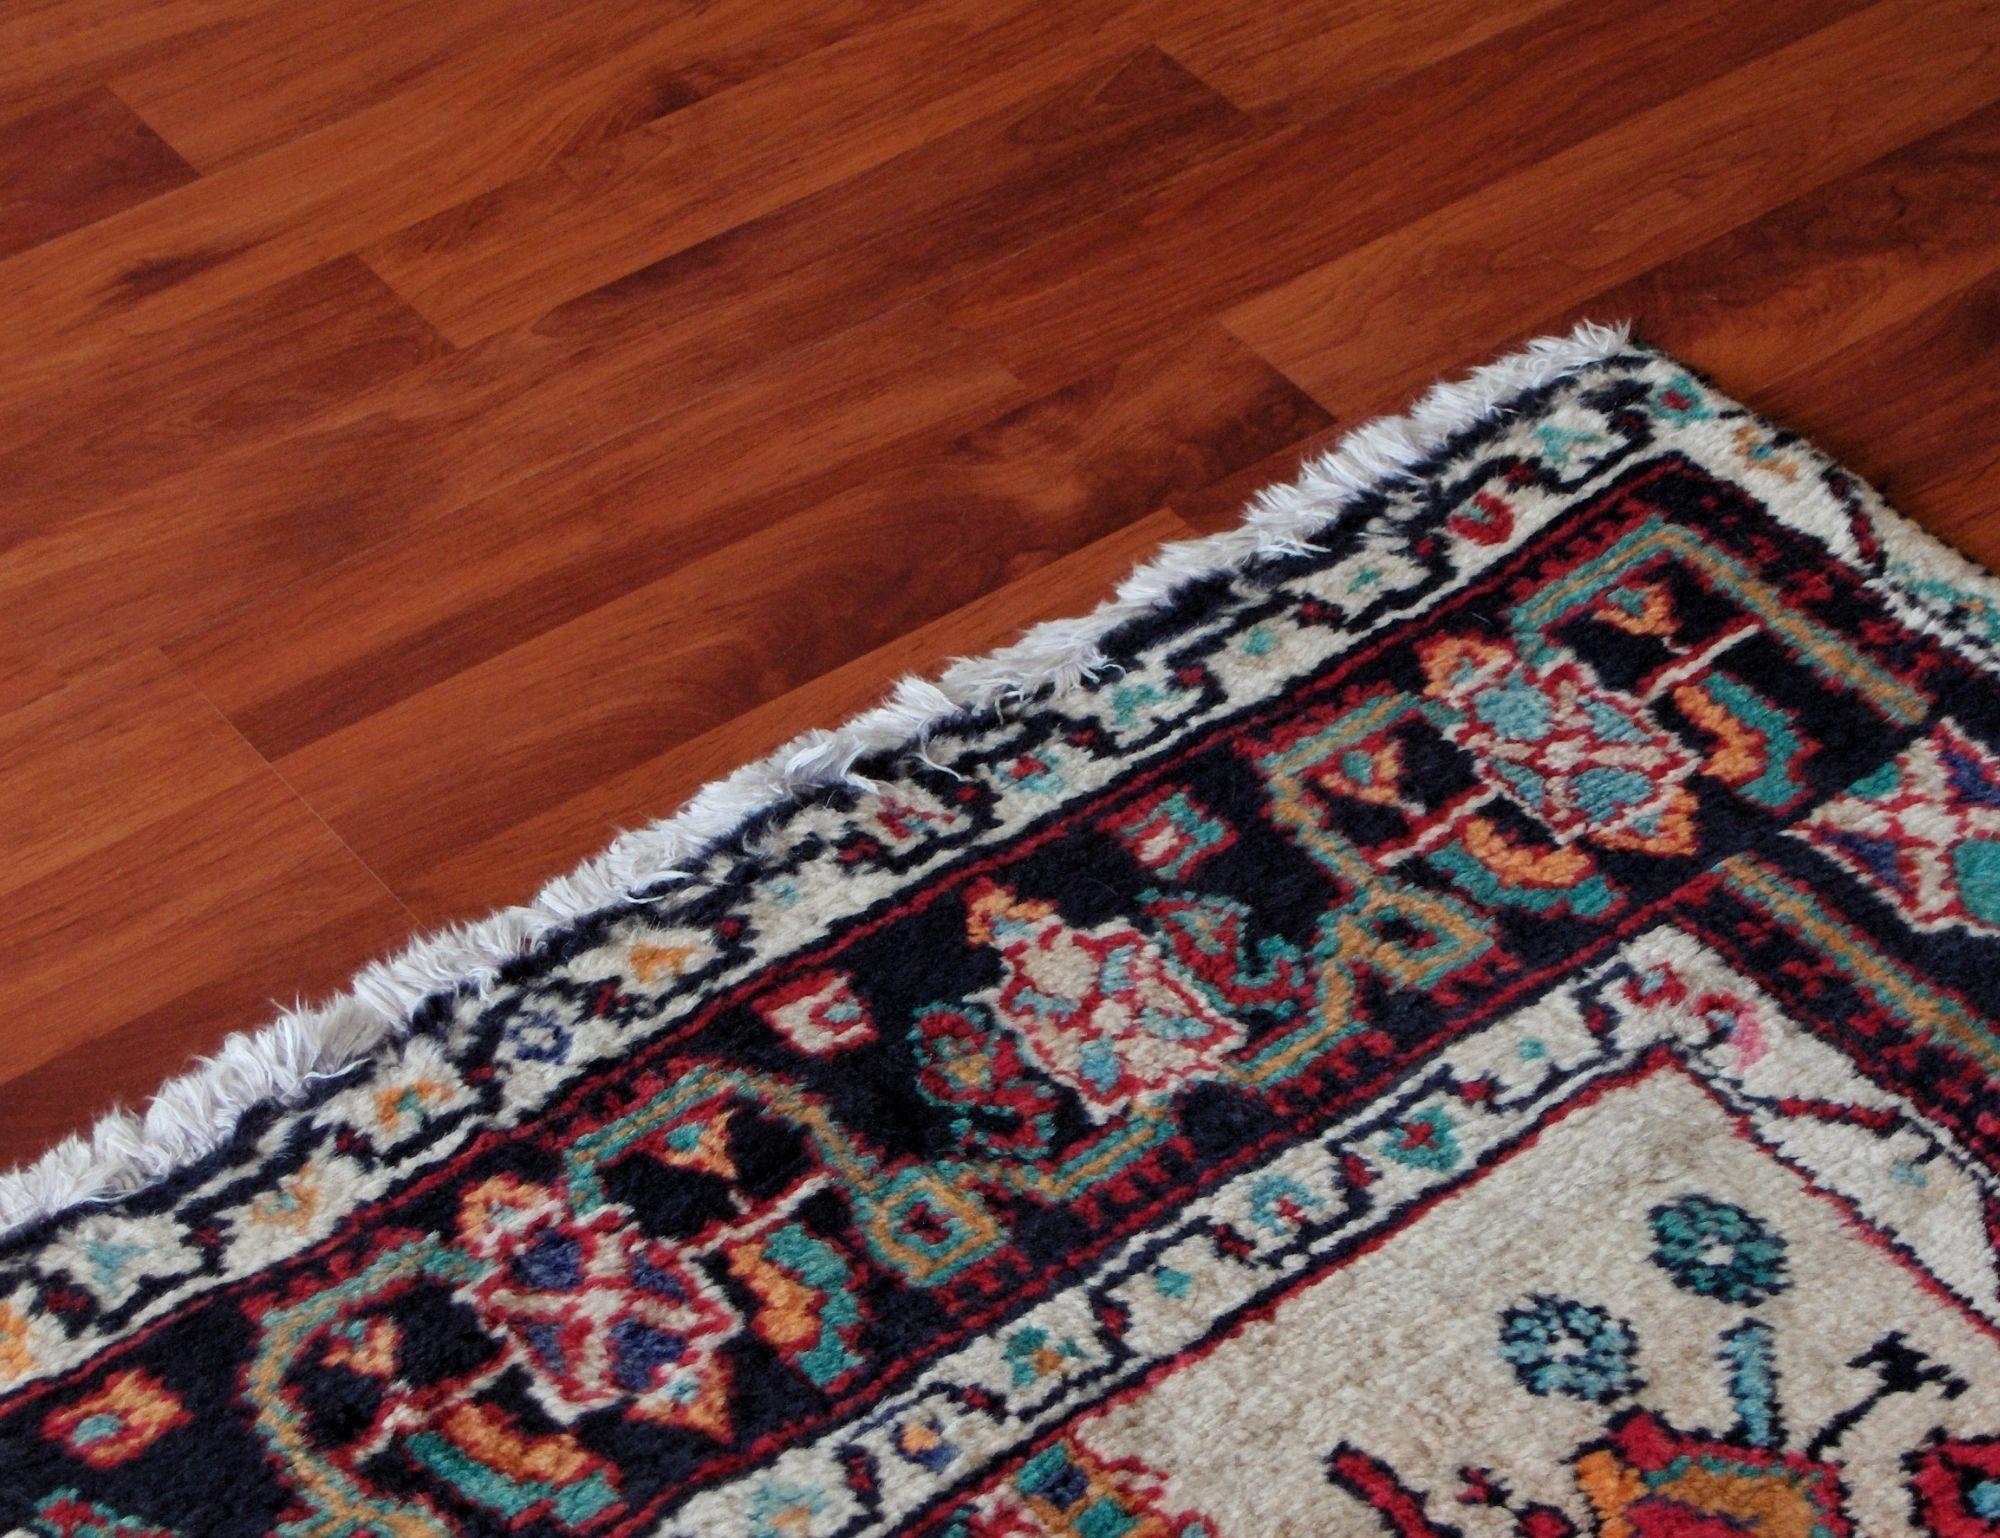 Double Sided Carpet Tape Heavy Duty for Area Rugs, Tile Floors Rug